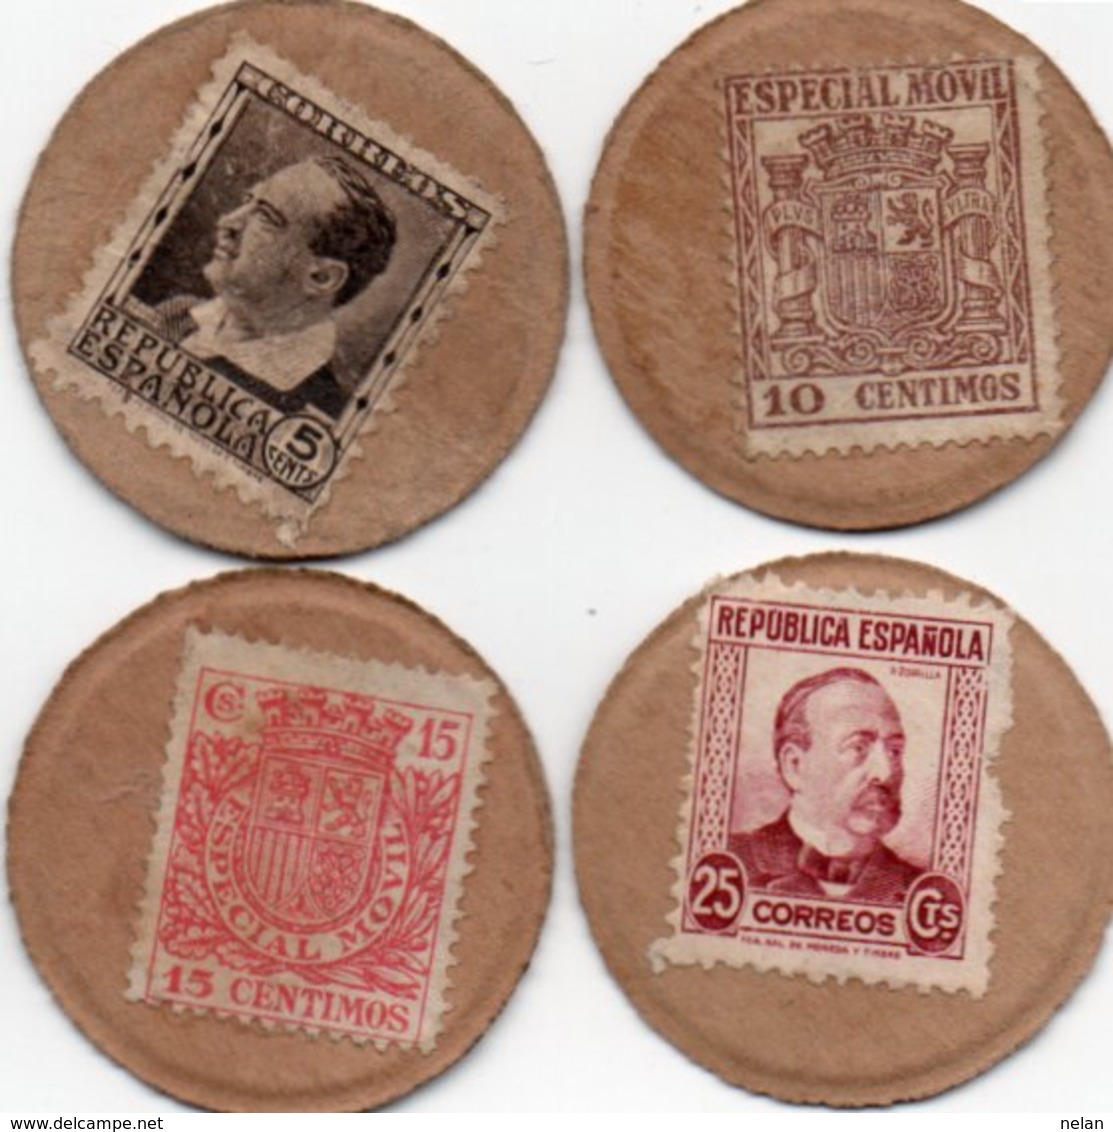 SPAGNA 5,10,15,25 CENTIMOS 1938 P-96 F,I,P,R (PERFETTE CONDIZIONI)Spagna, Fábrica Nacional De Moneda Y Timbre - FNMT - Collections